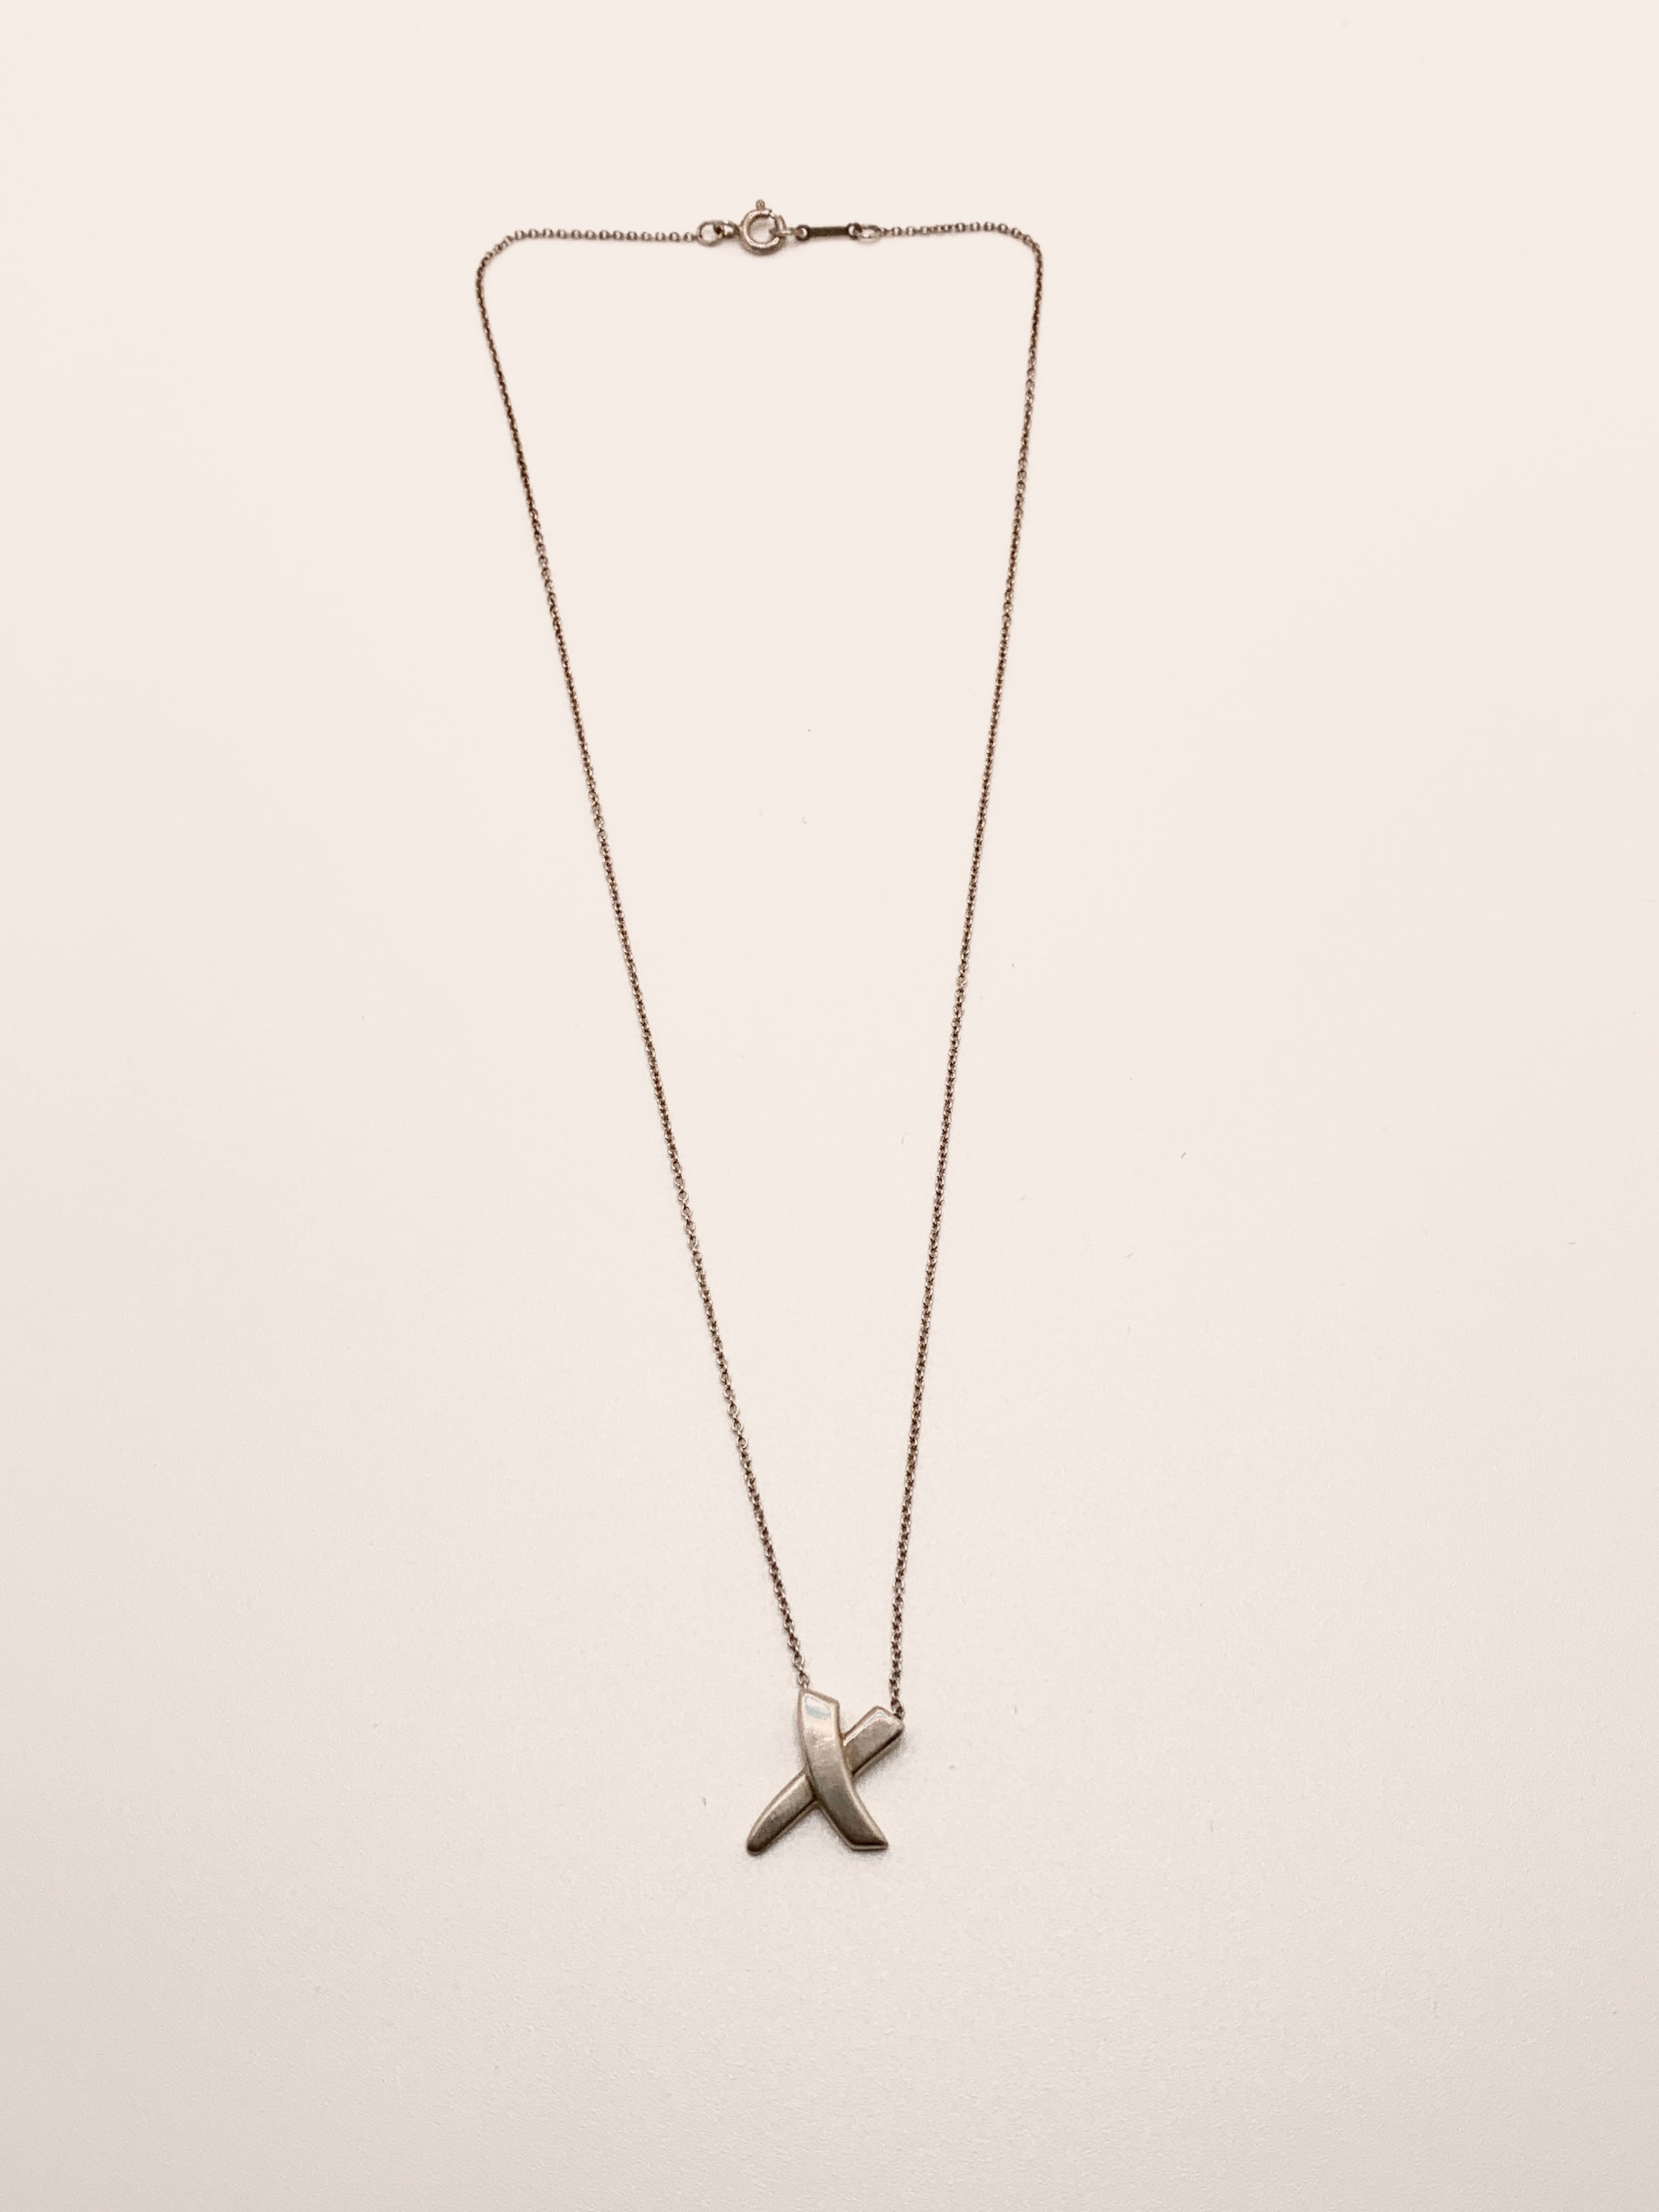 Tiffany & Co Paloma Picasso 18K Gold Mini Graffiti X Necklace - Stacks Well  | eBay